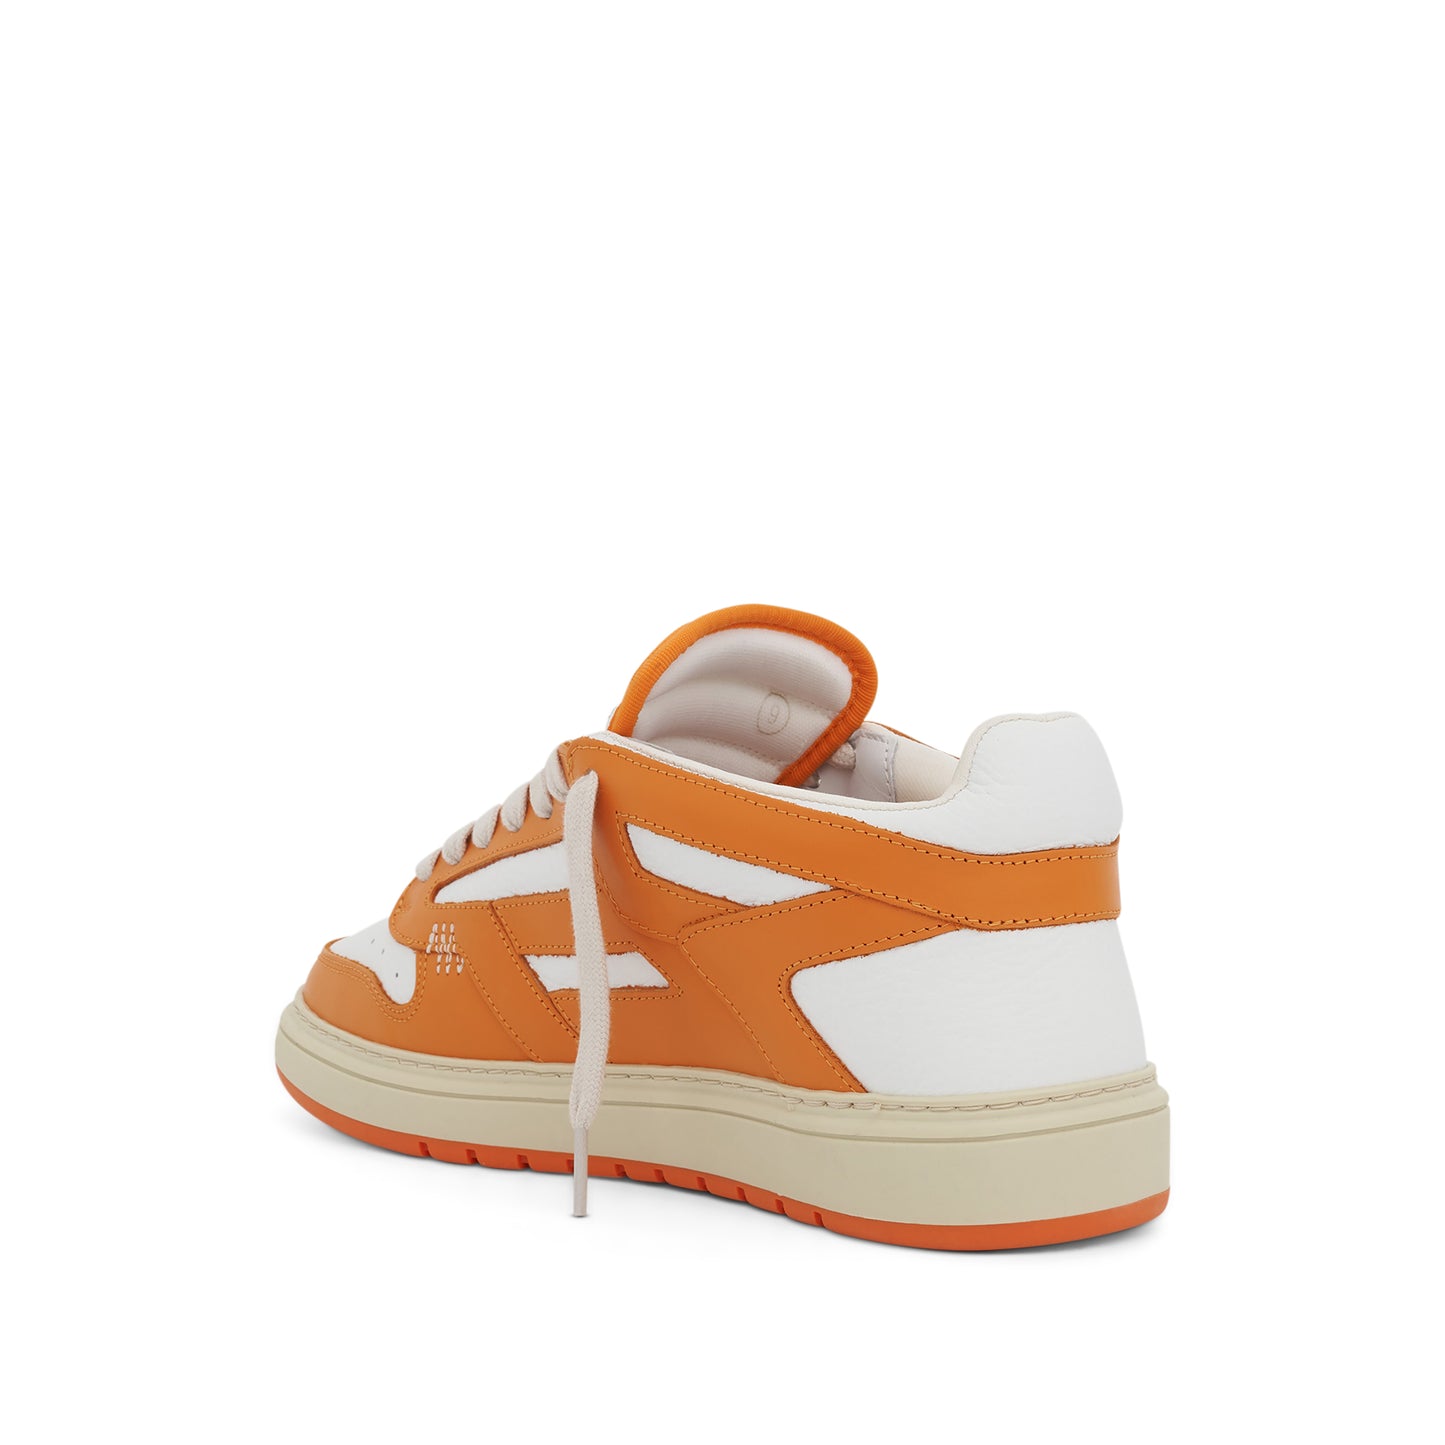 Reptor Low Sneaker in Neon Orange/Vintage White